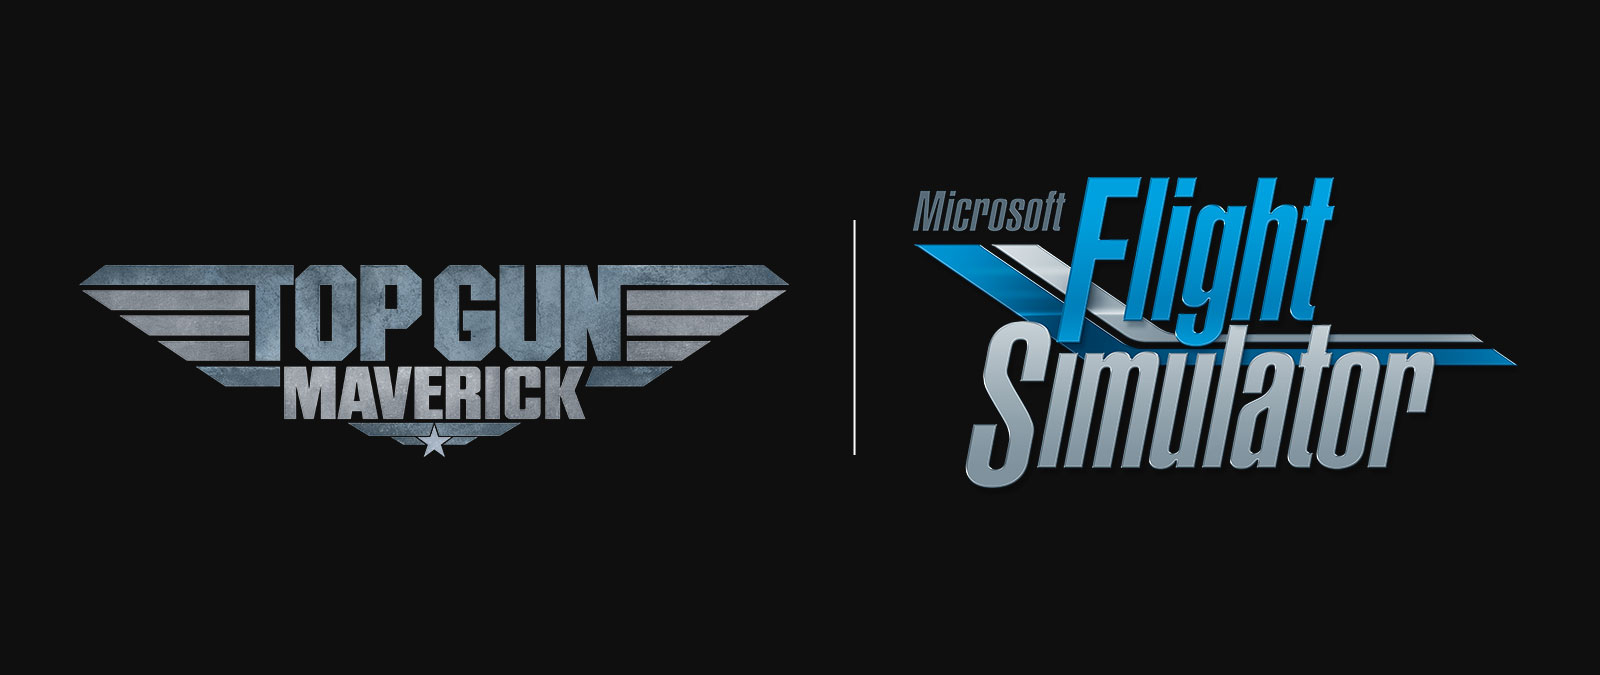 Microsoft Flight Simulator logo and Top Gun logo